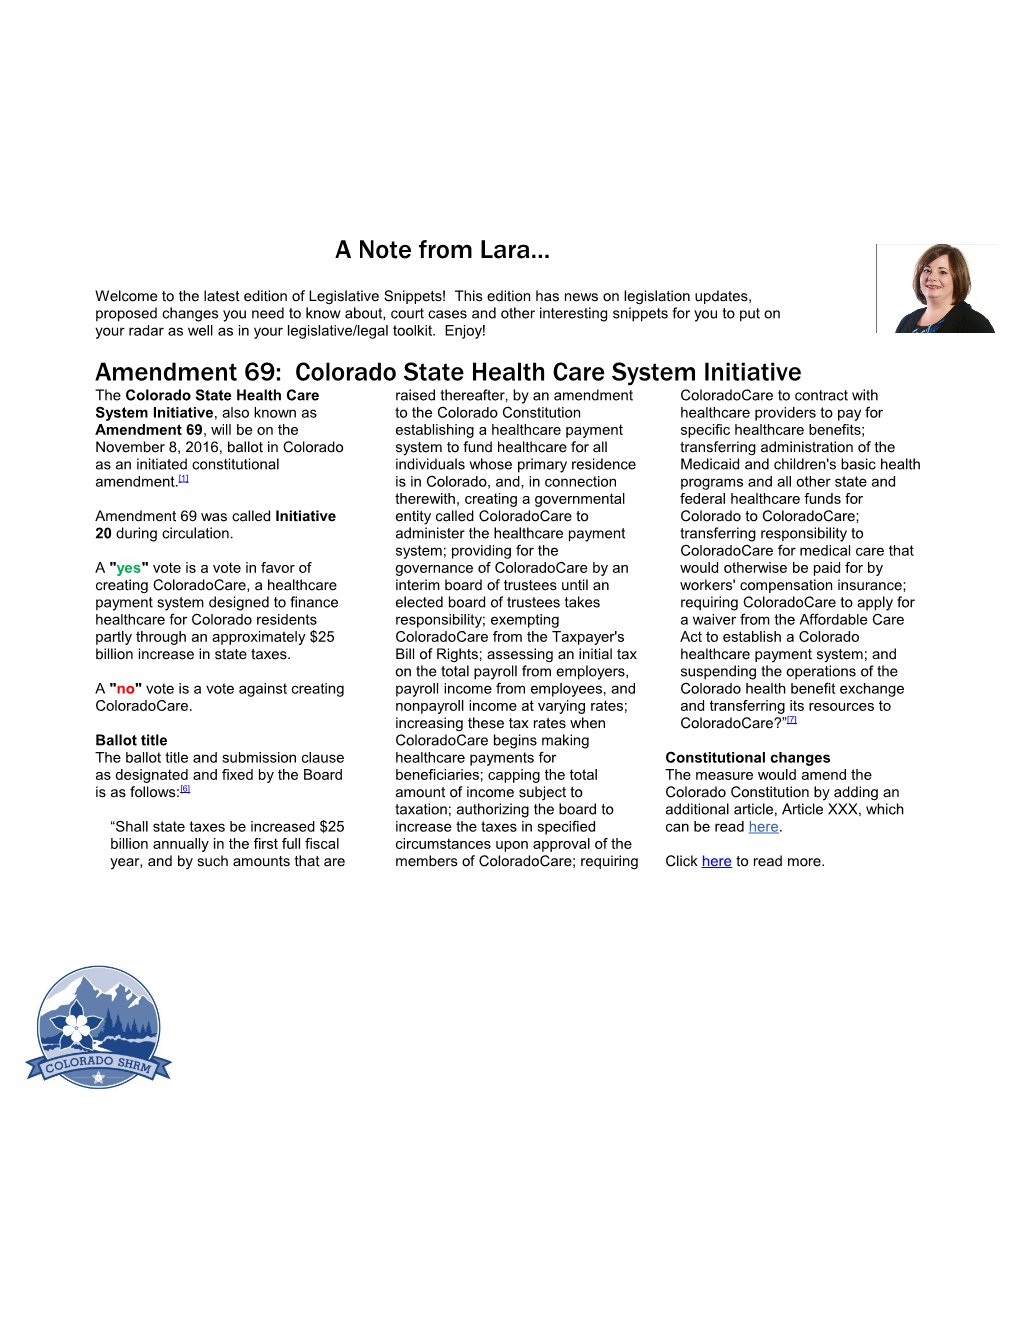 Amendment 69: Colorado State Health Care System Initiative